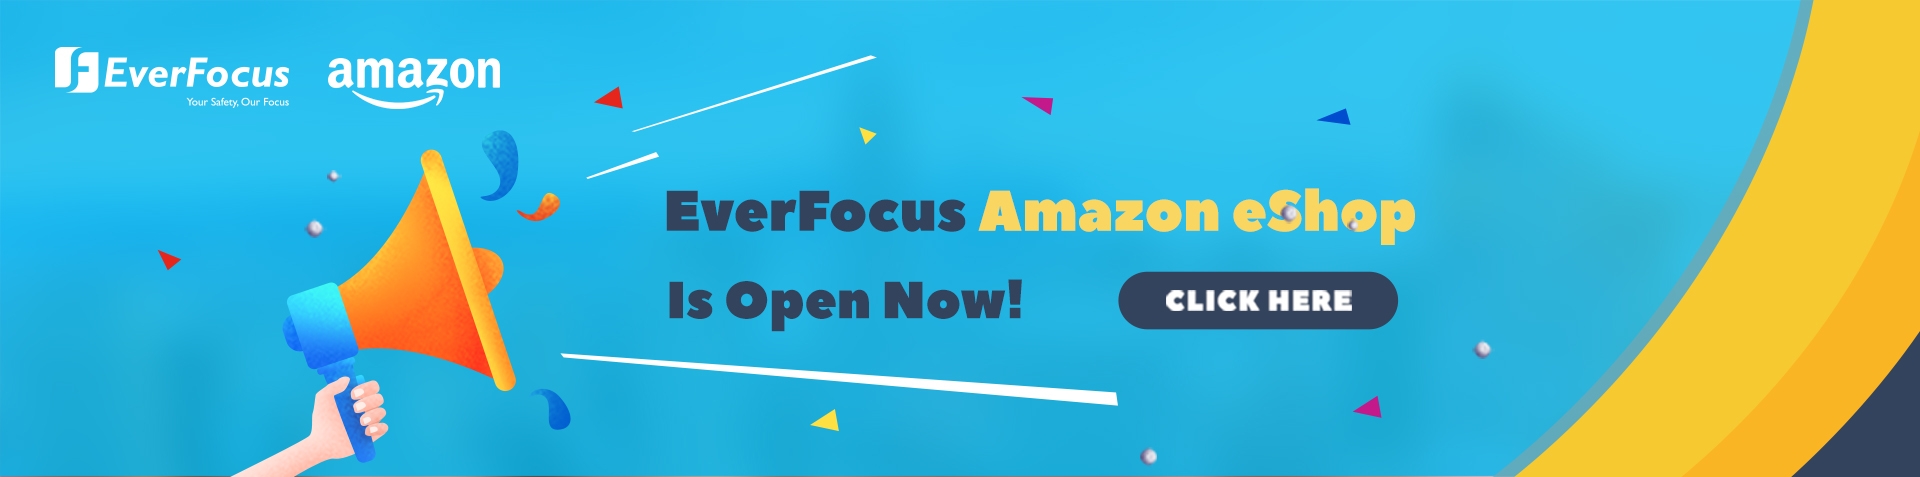 EverFocus Amazon eShop is Open Now!